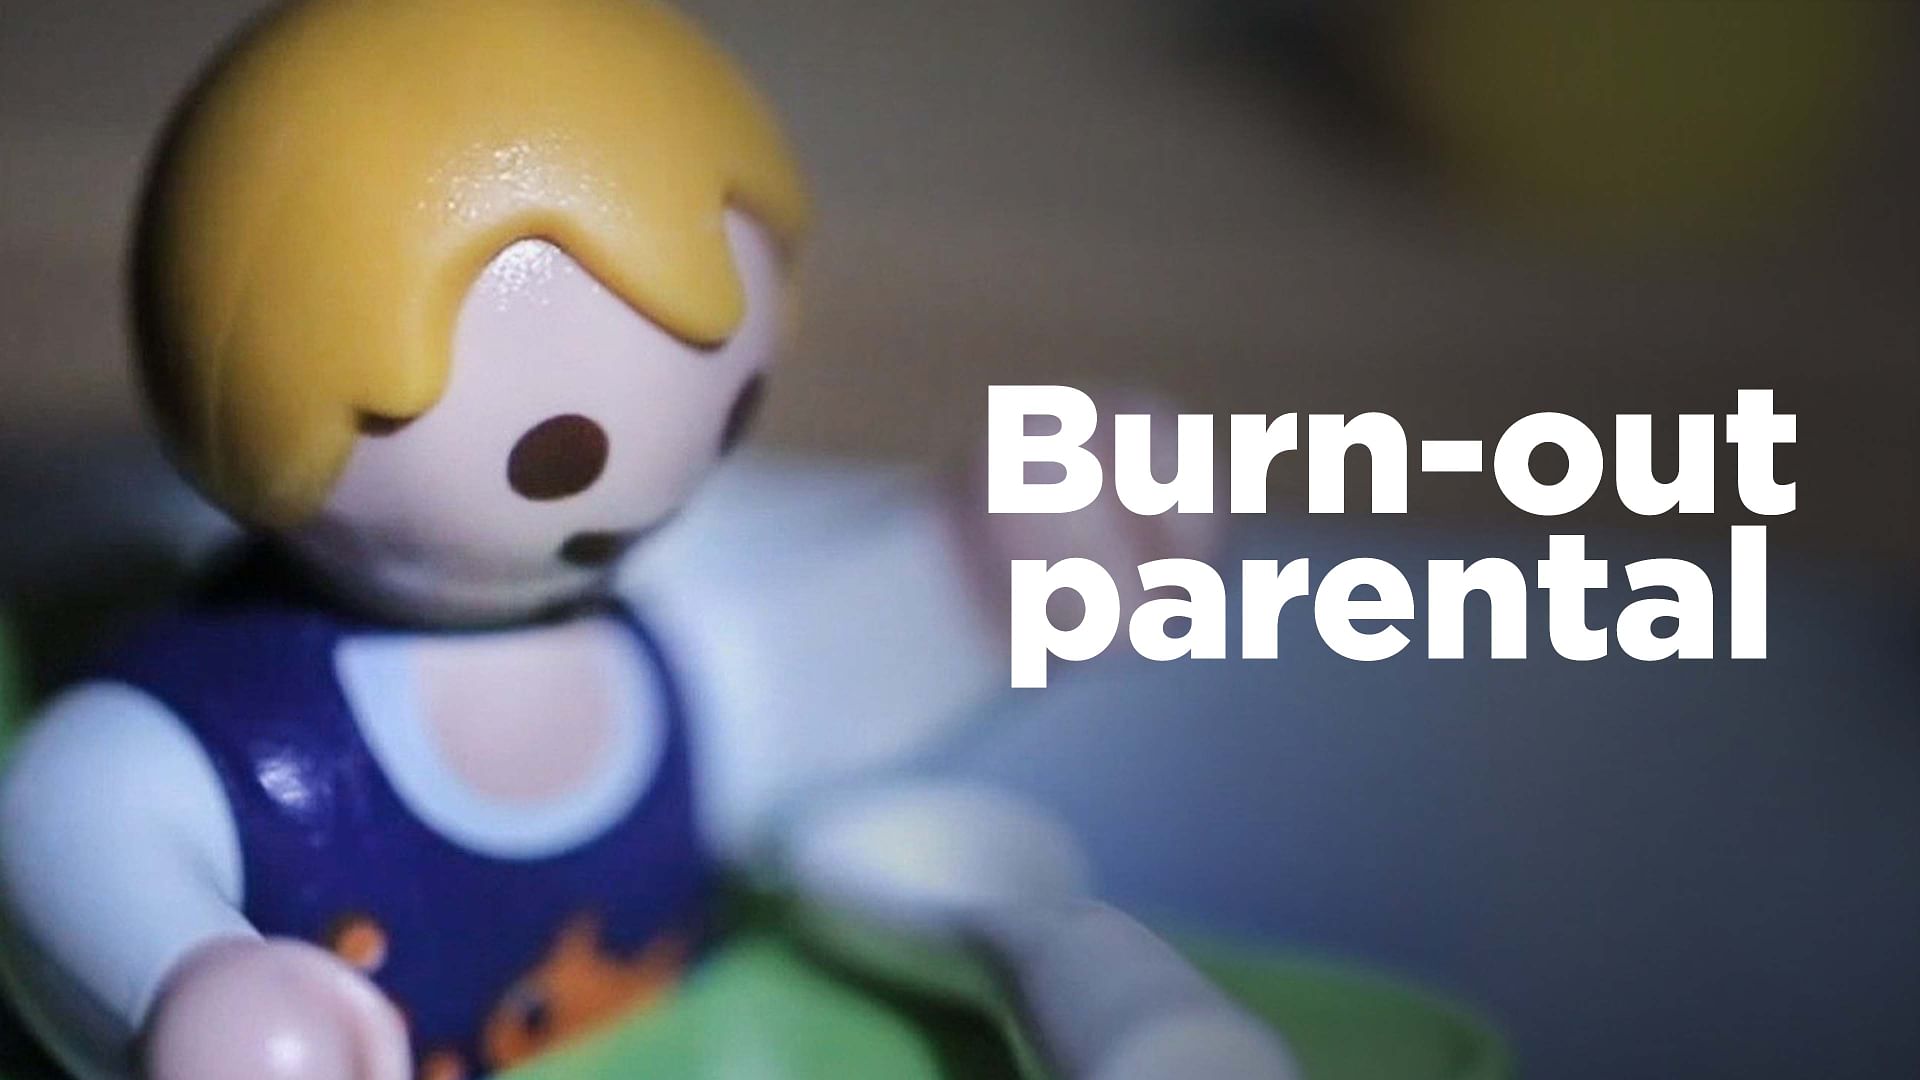 Burn-out parental - Quand les parents craquent